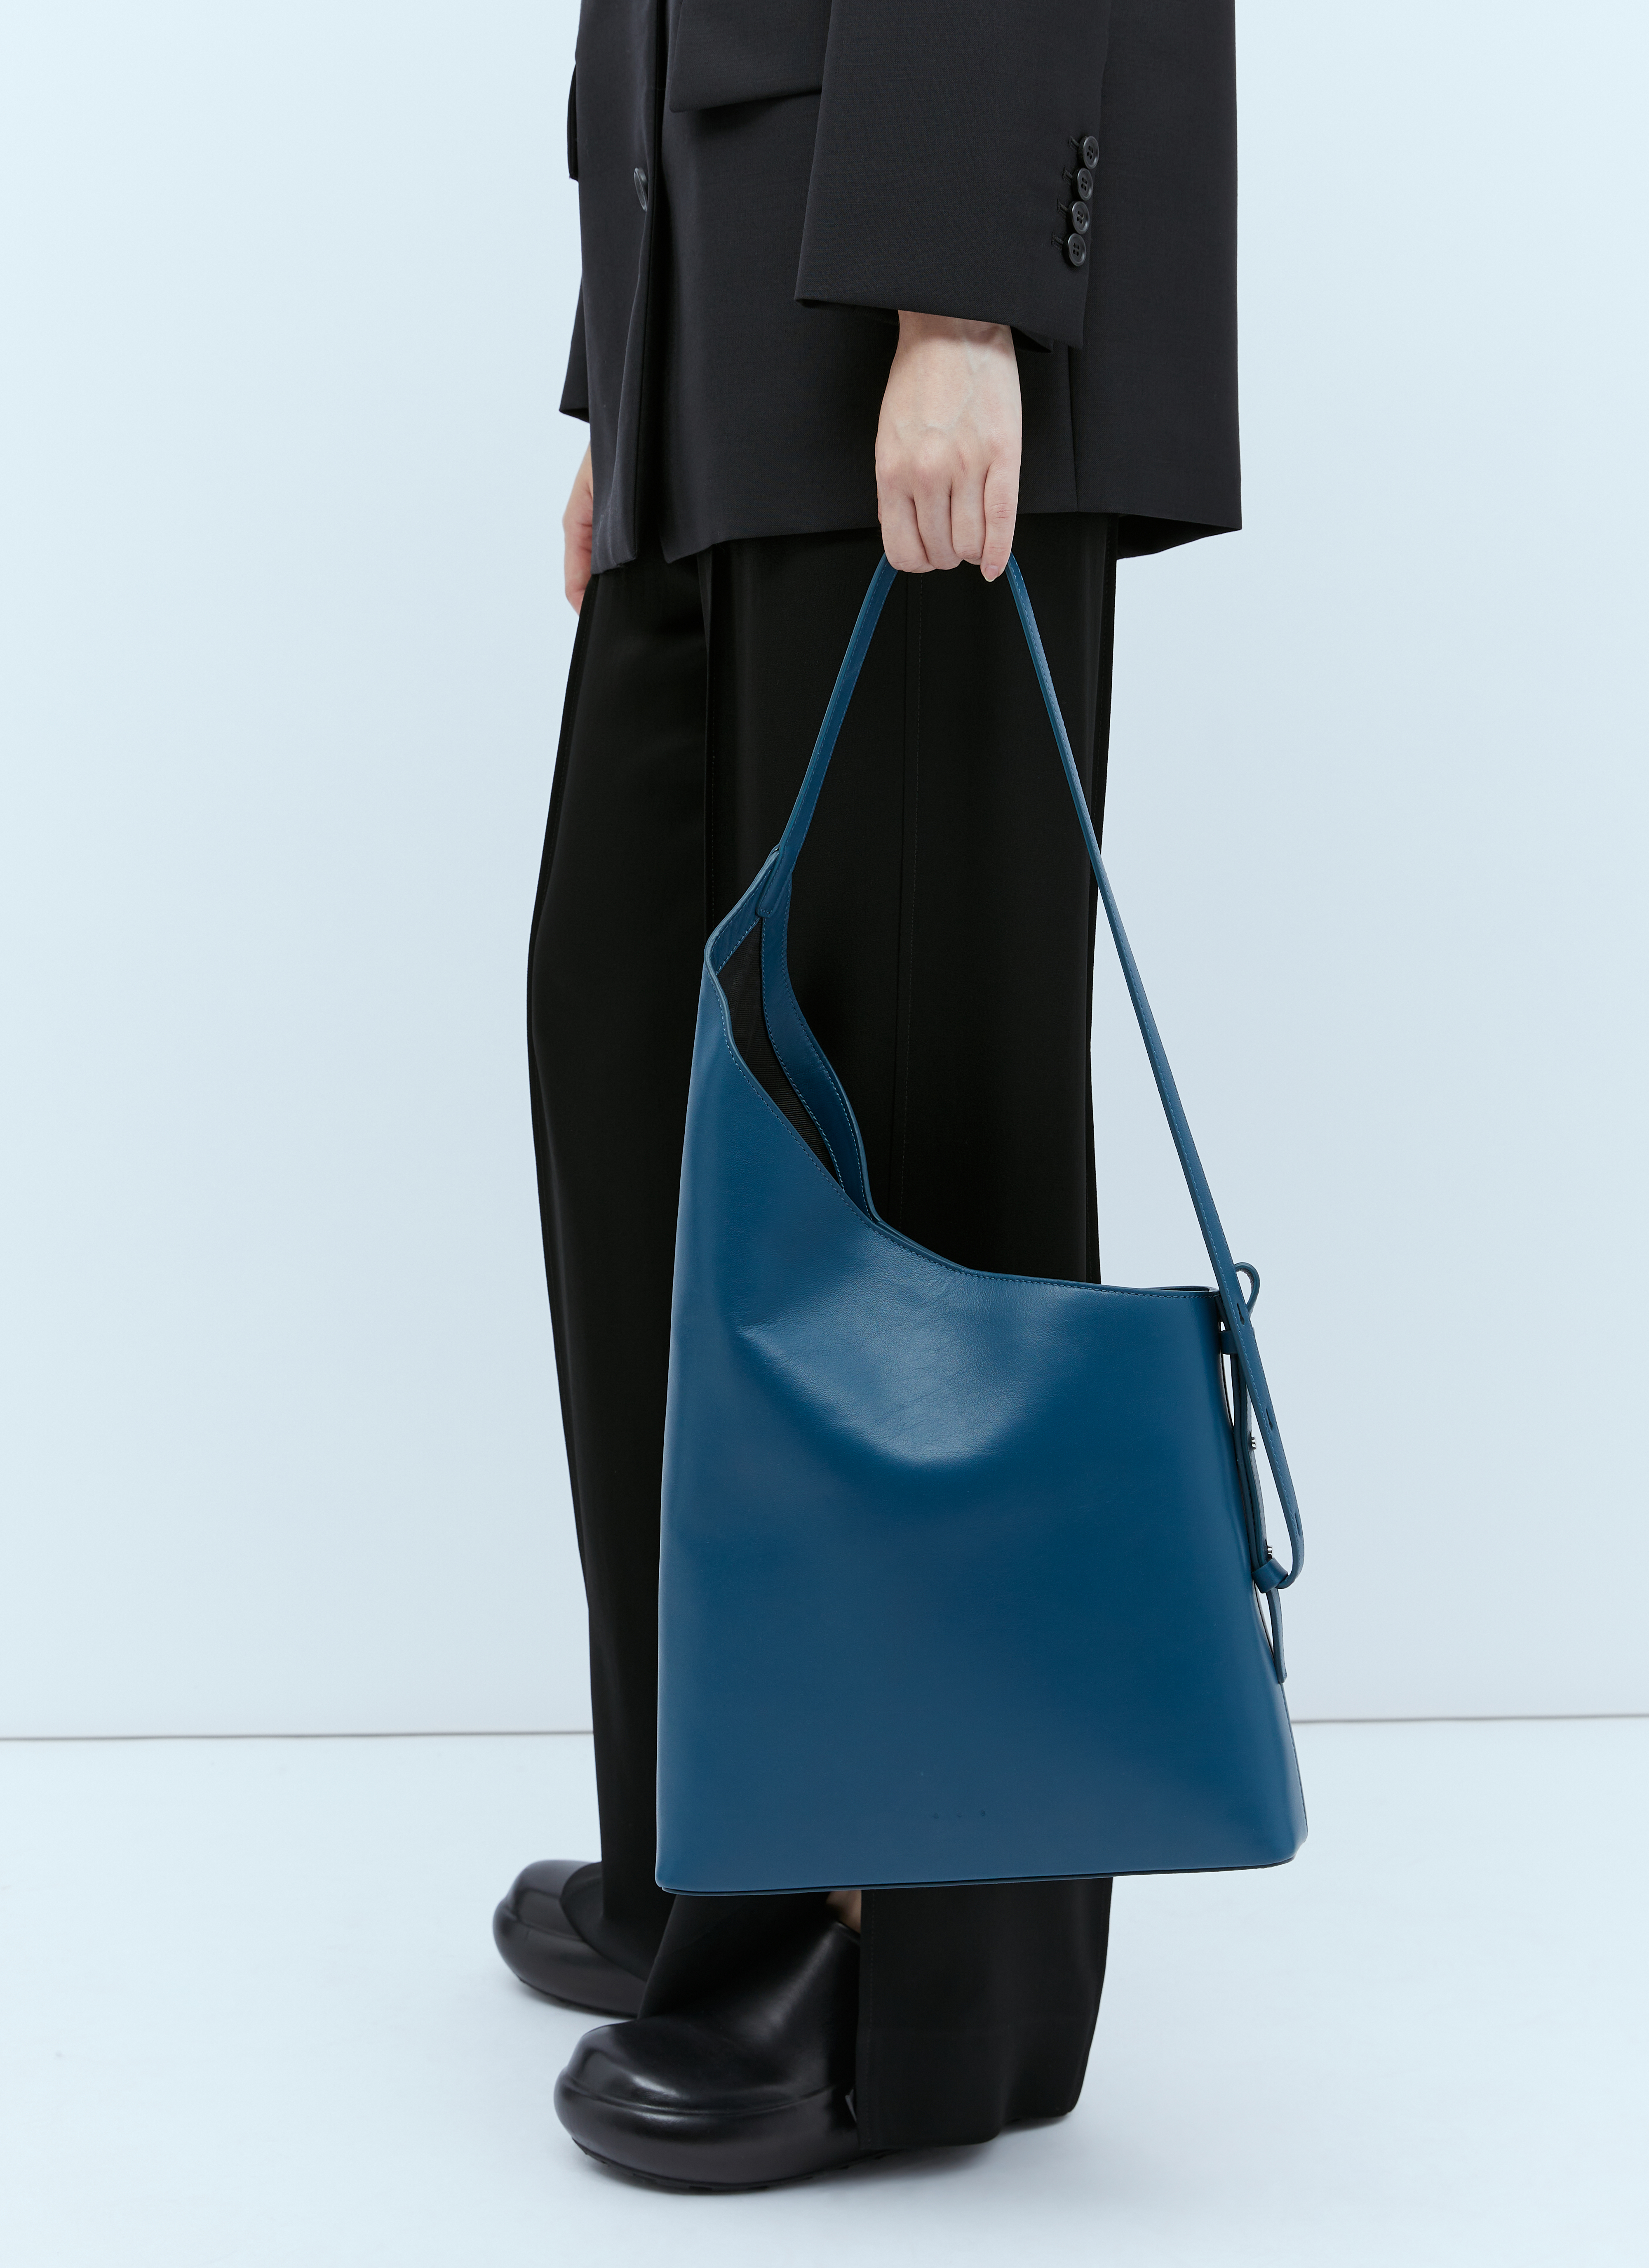 Demi Lune Aesther Ekme Handbags for Women - Vestiaire Collective